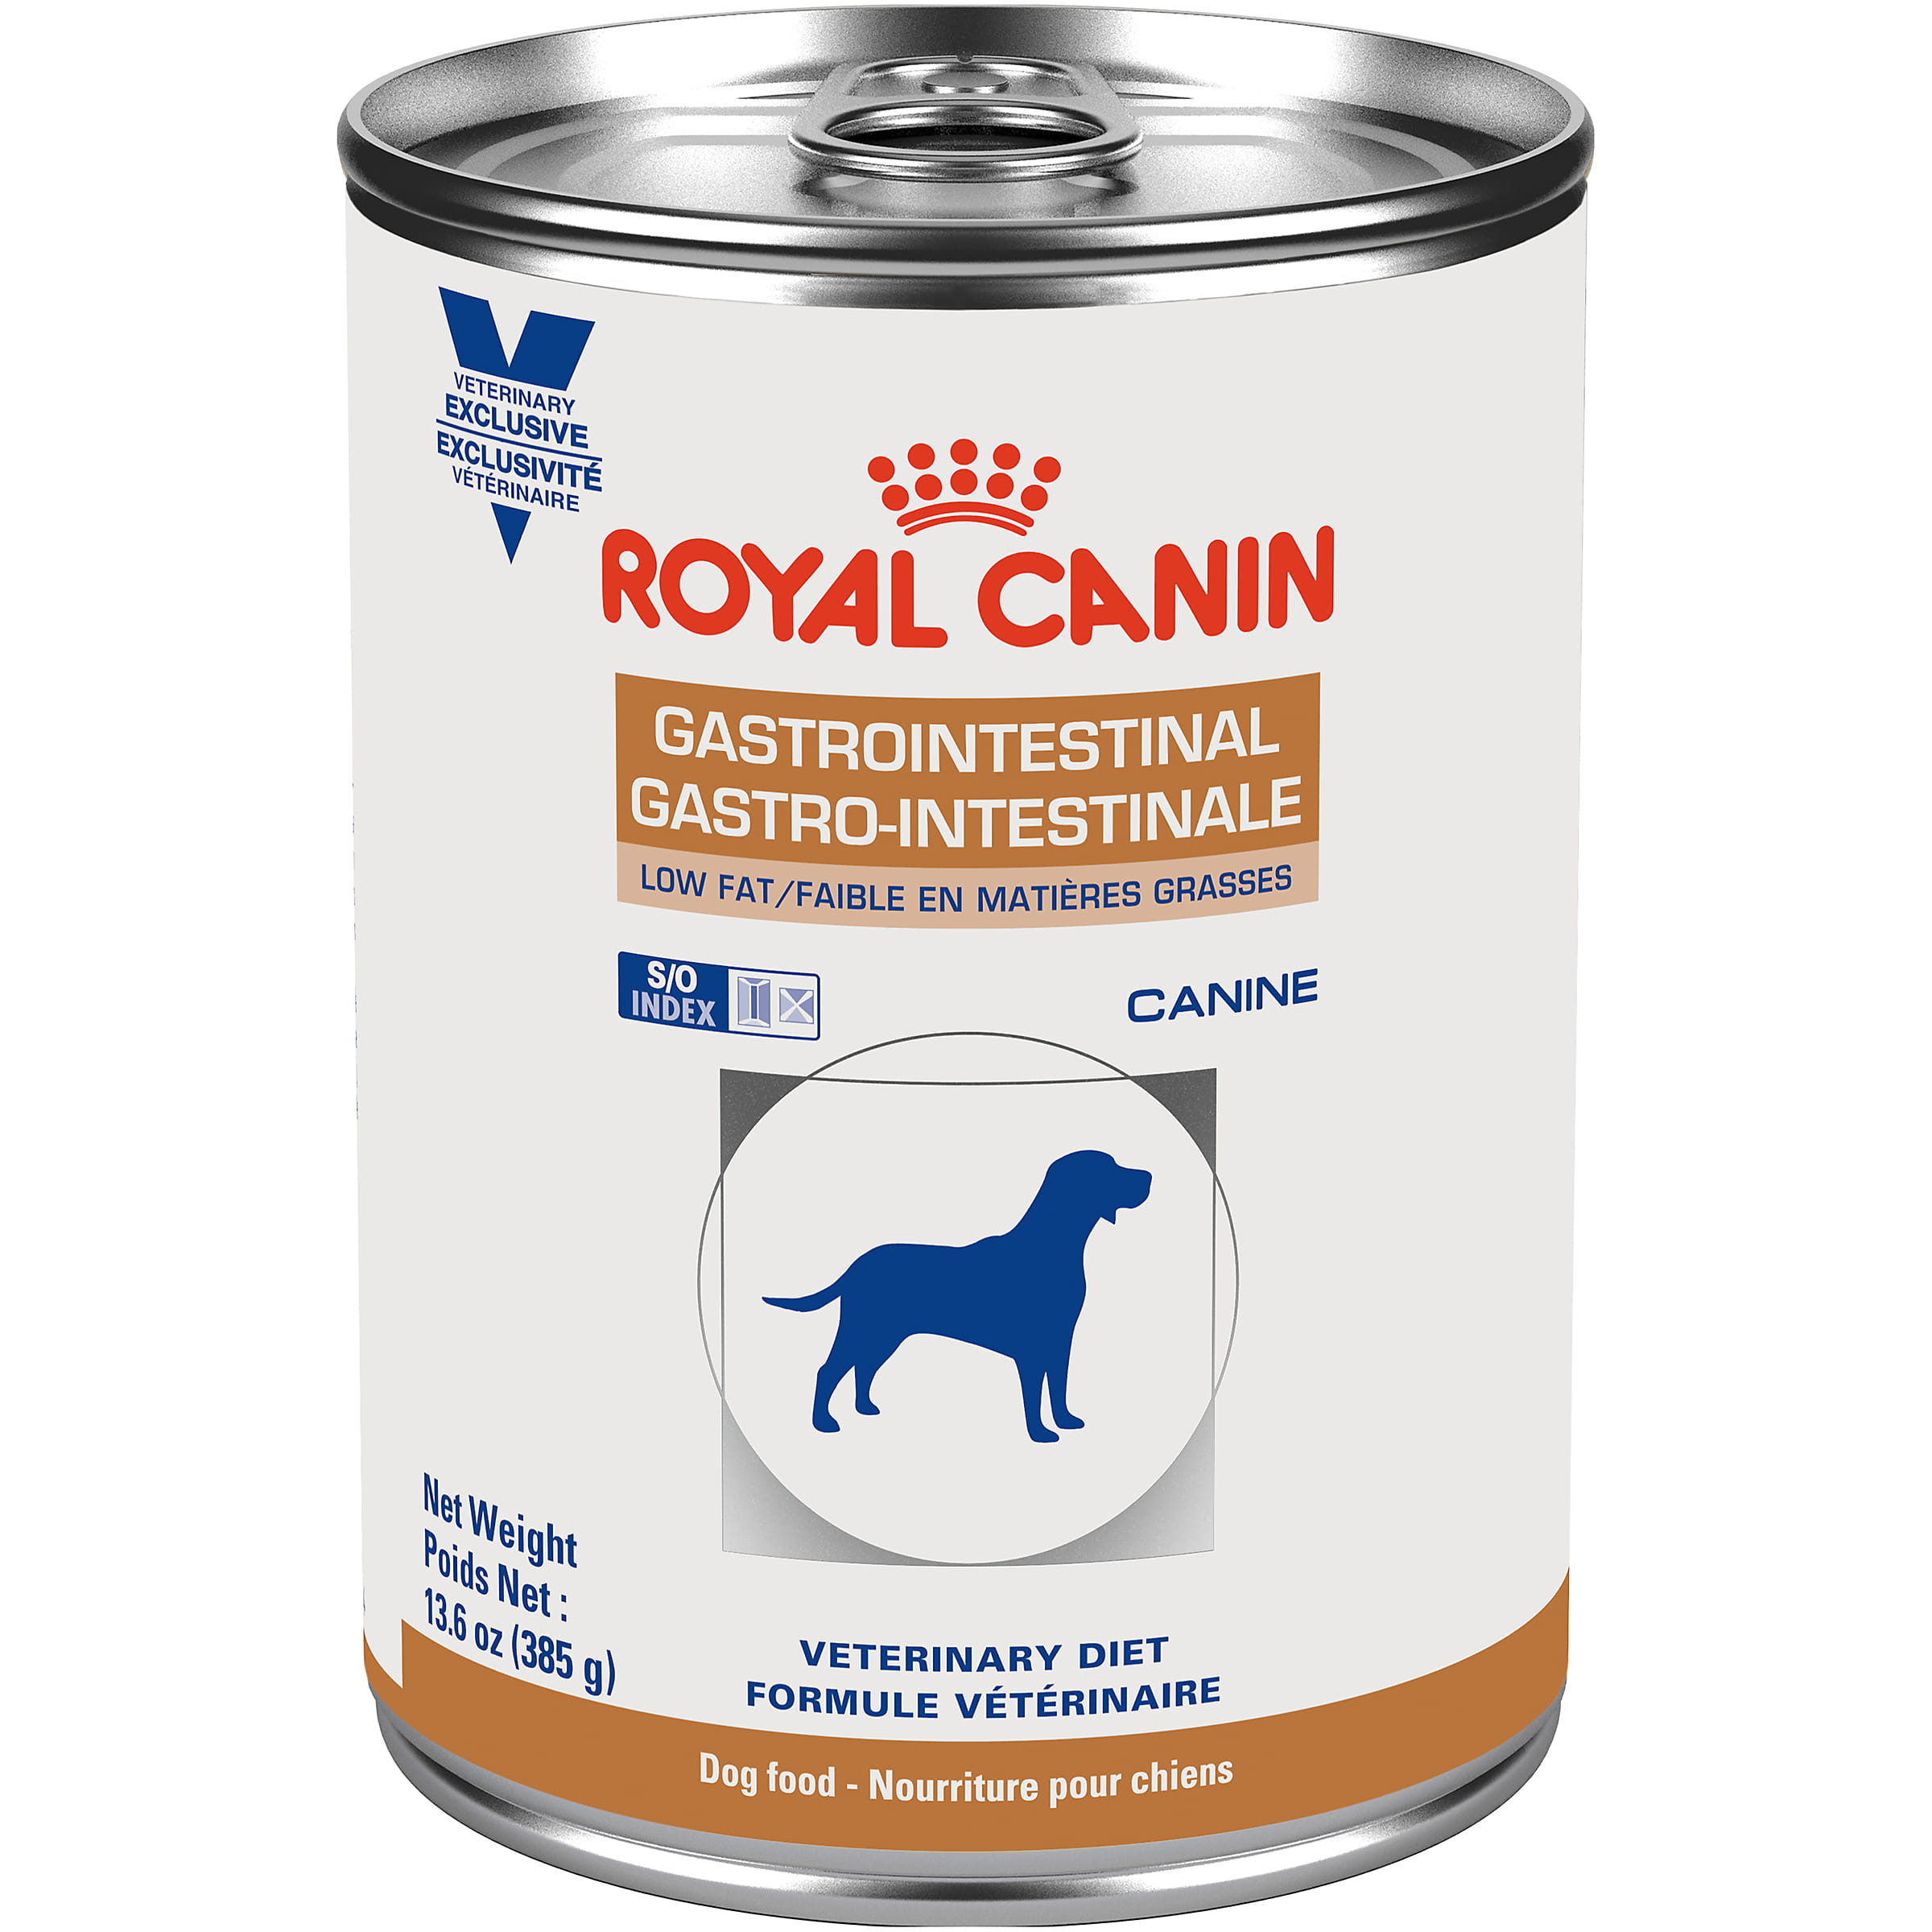 Royal Canin Gastrointestinal Cat Food Wet